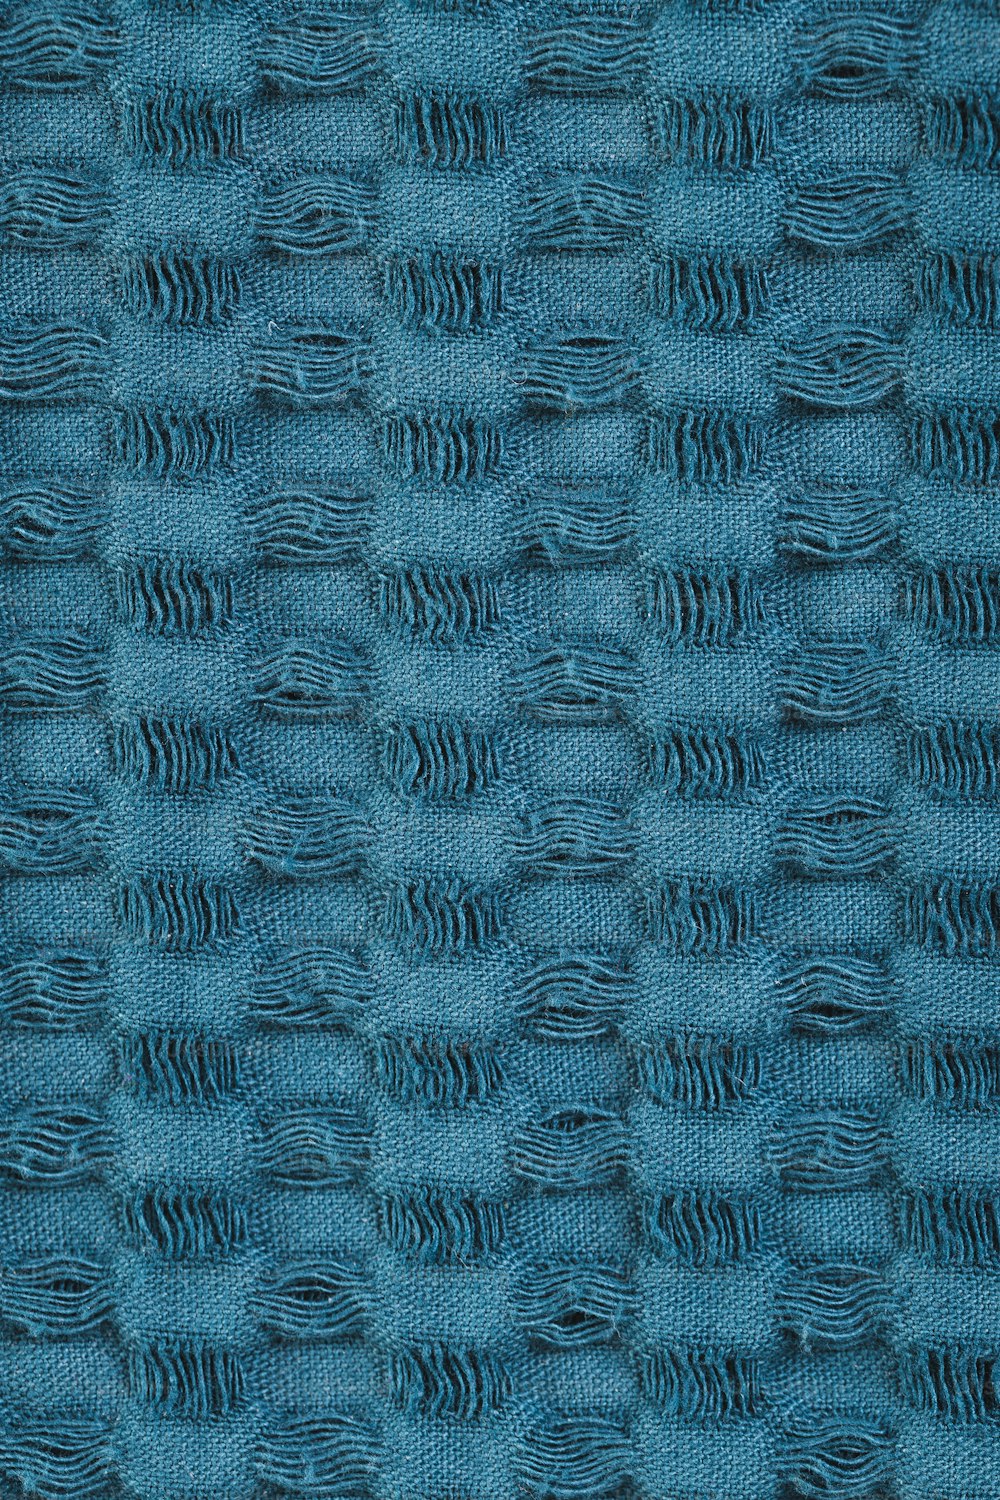 Un primer plano de una textura de tela azul